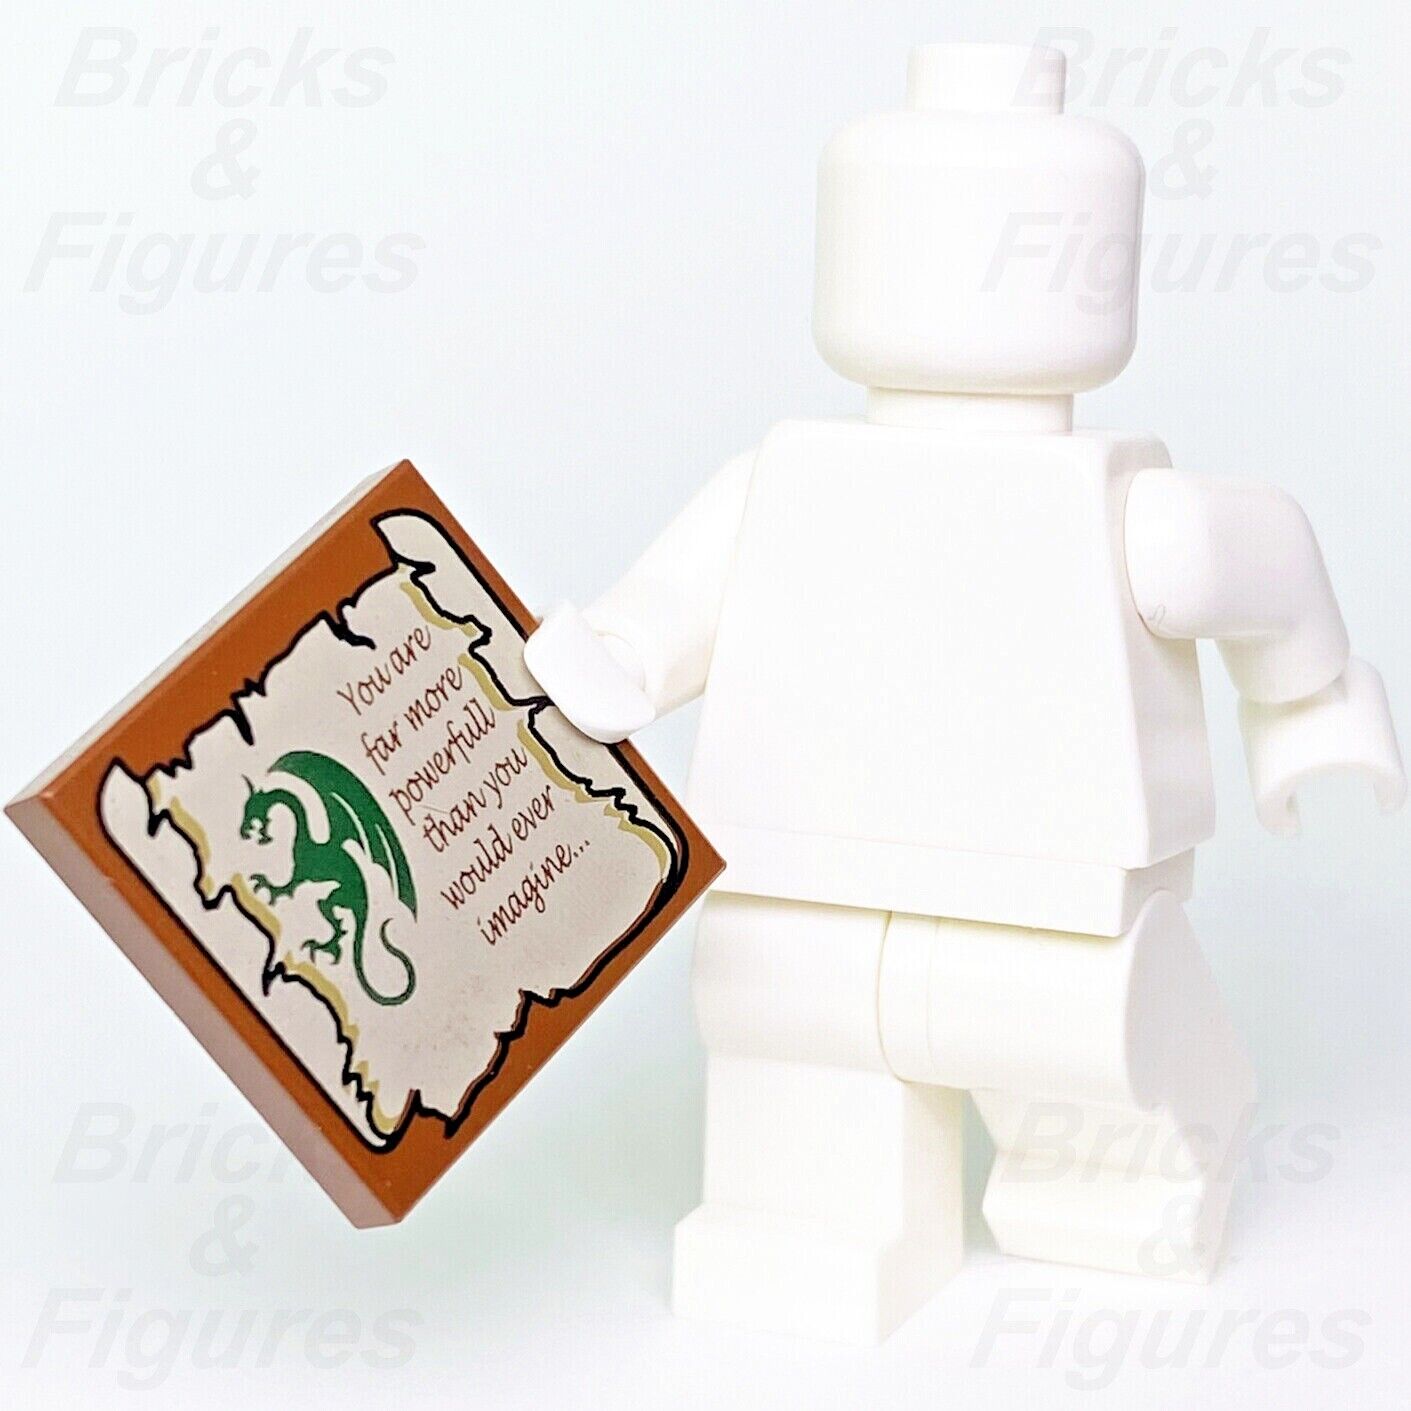 Castle LEGO Dragon and Scroll Pattern Tile 2 x 2 Part Kingdoms 7955 4842 853373 - Bricks & Figures